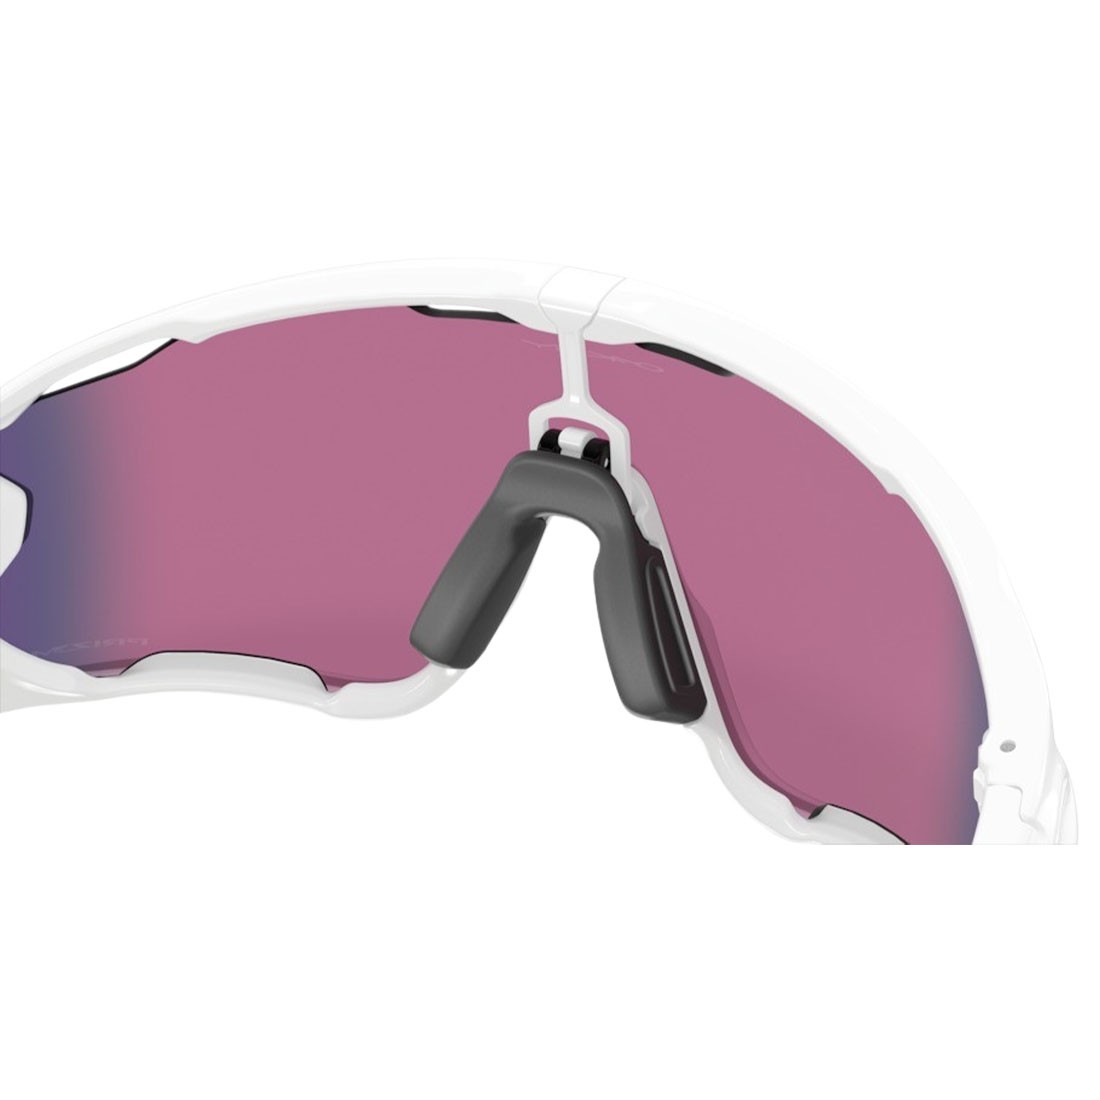 SL102 square-frame sunglasses